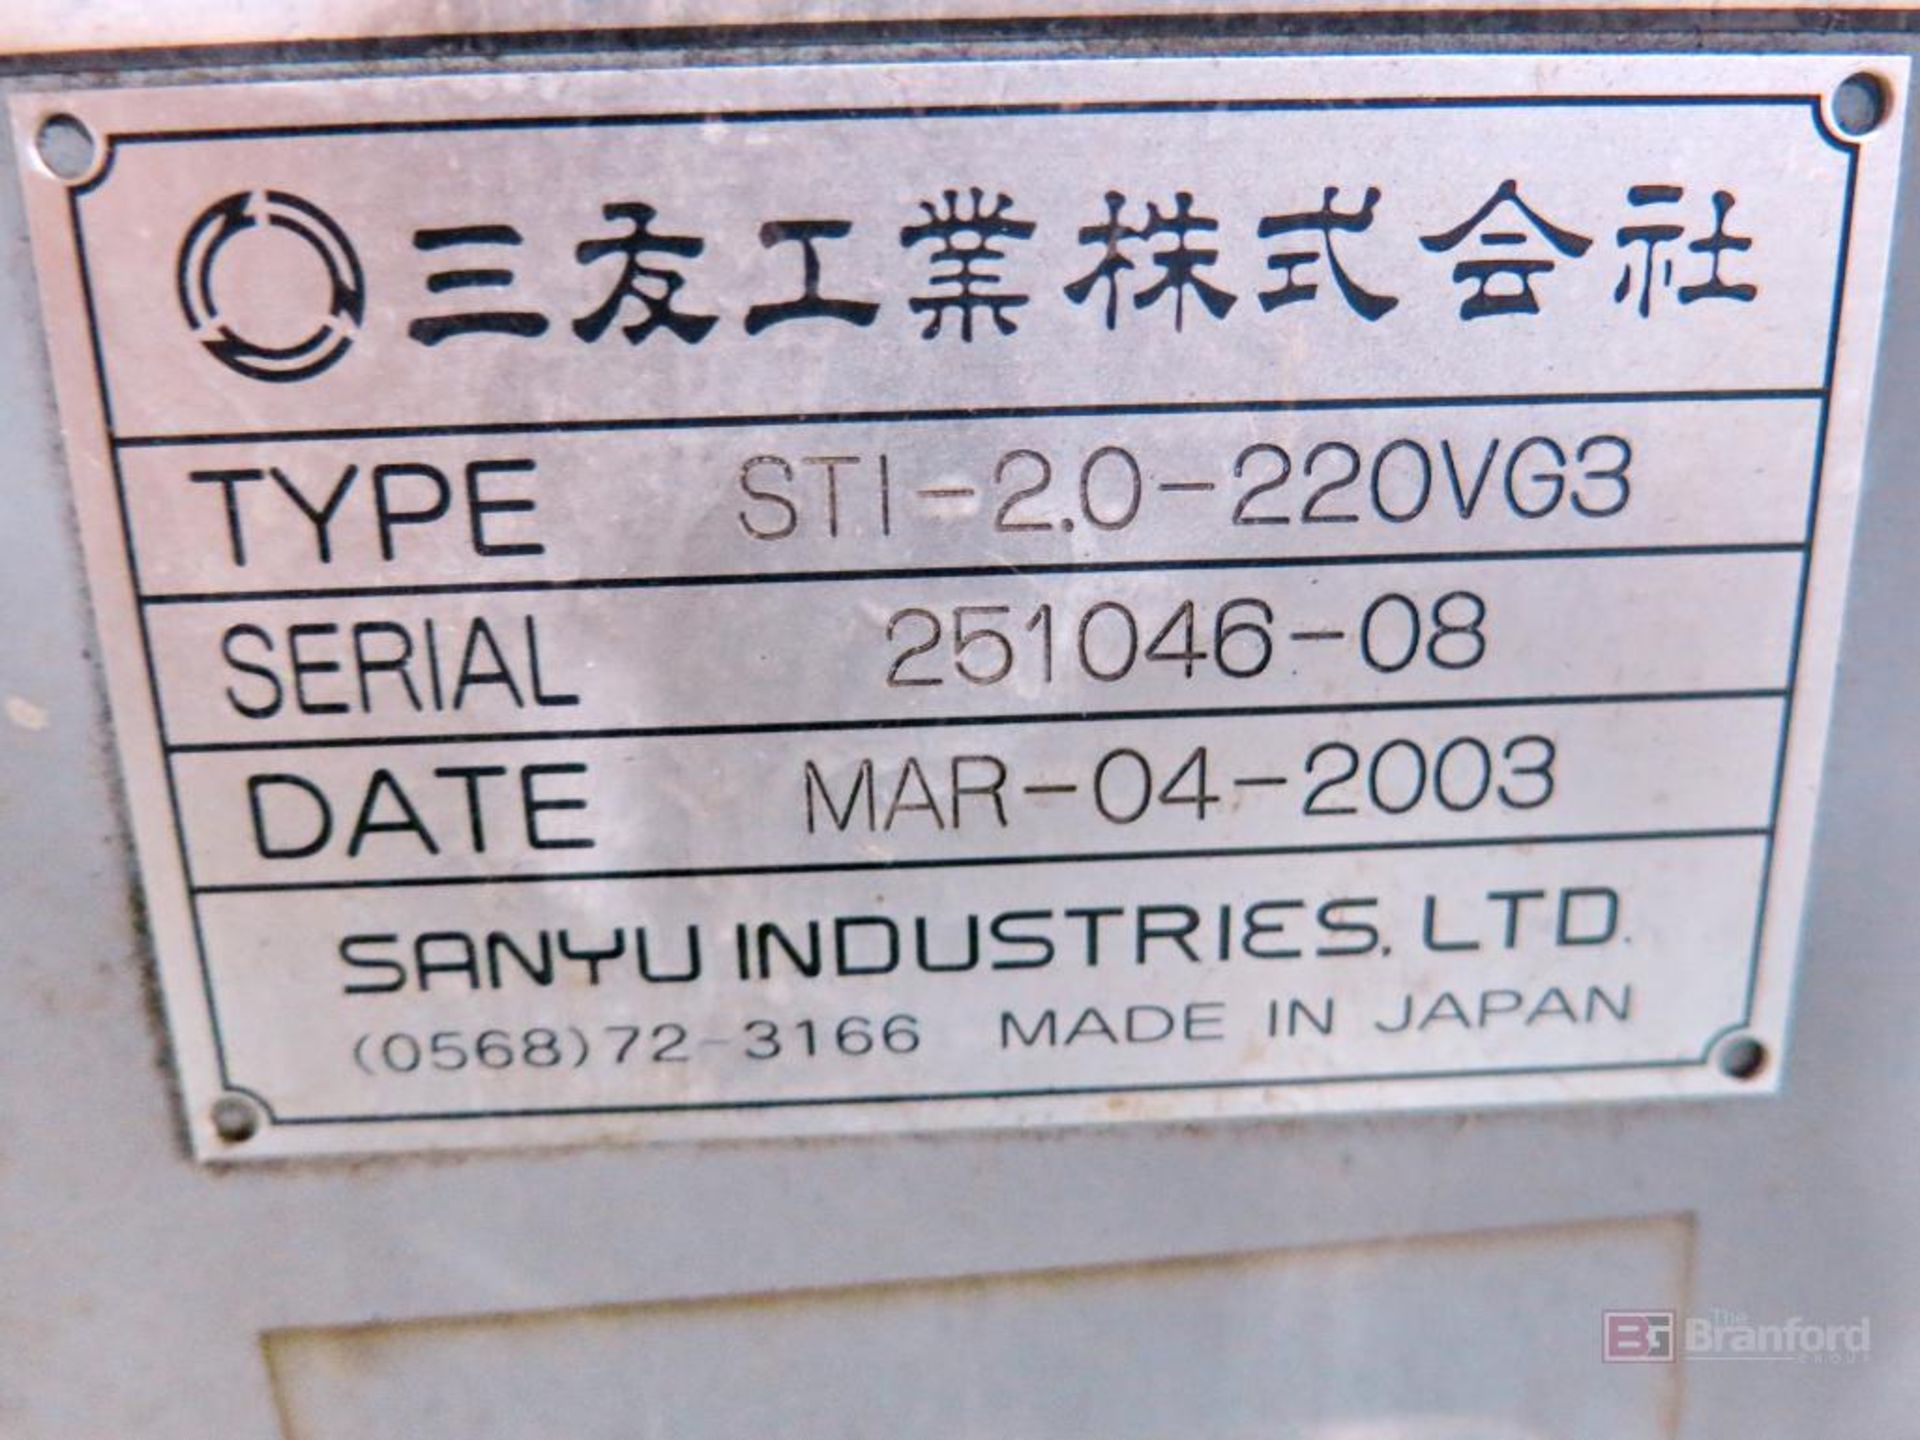 Sanyu Model STI-2.0-220VG3 2l Vertical Rubber Injection Mold Machine - Image 4 of 4